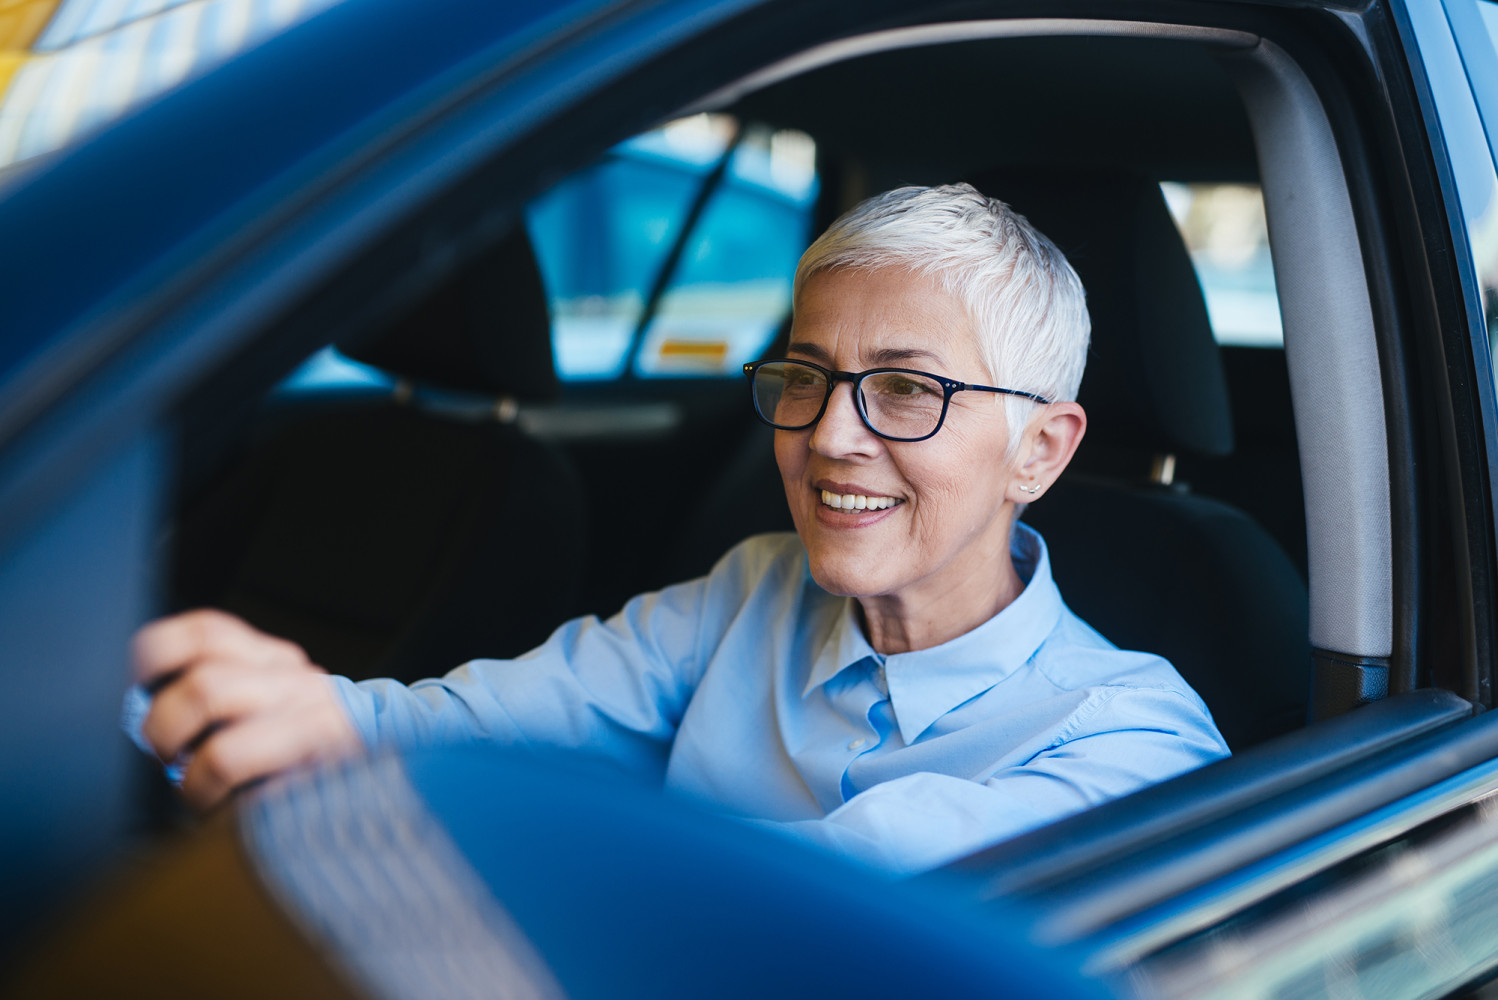 Auto - Elderly Female Driving Smiling